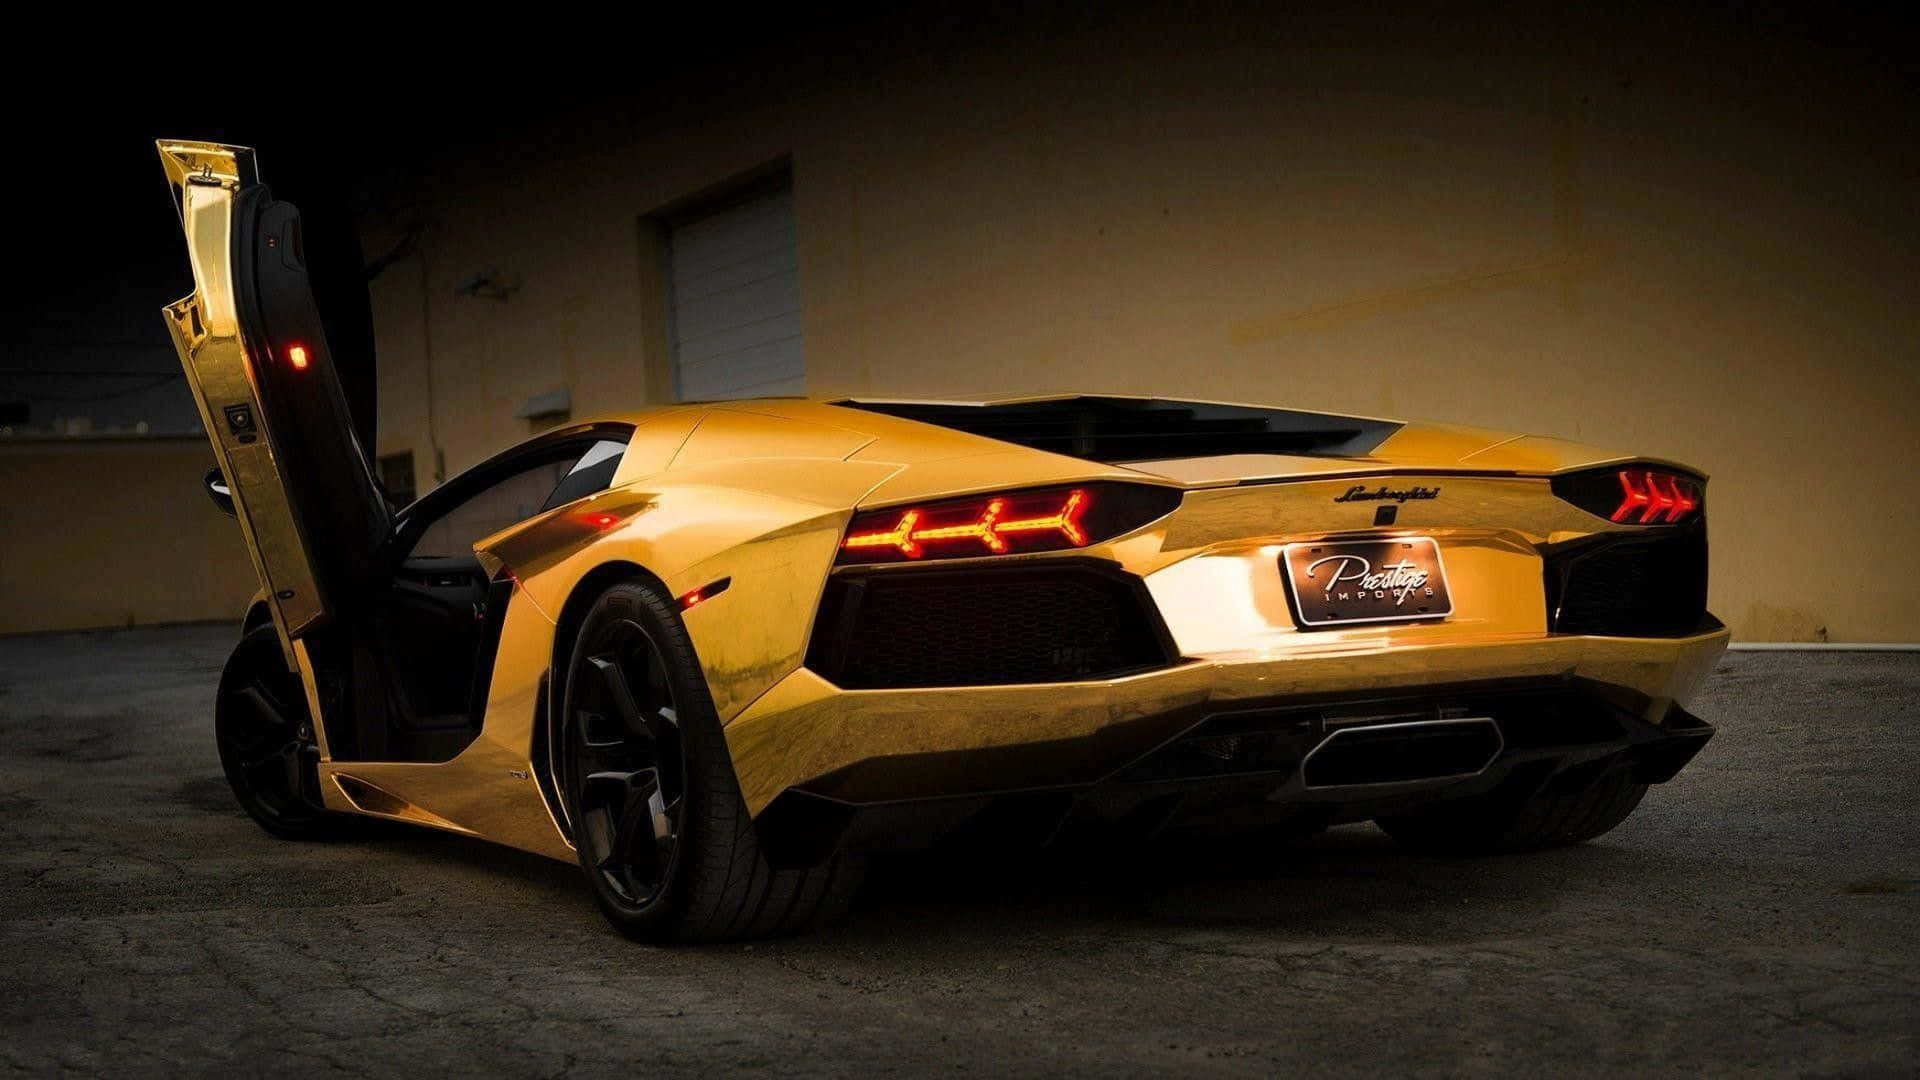 Get behind the wheel of a gold Lamborghini Wallpaper